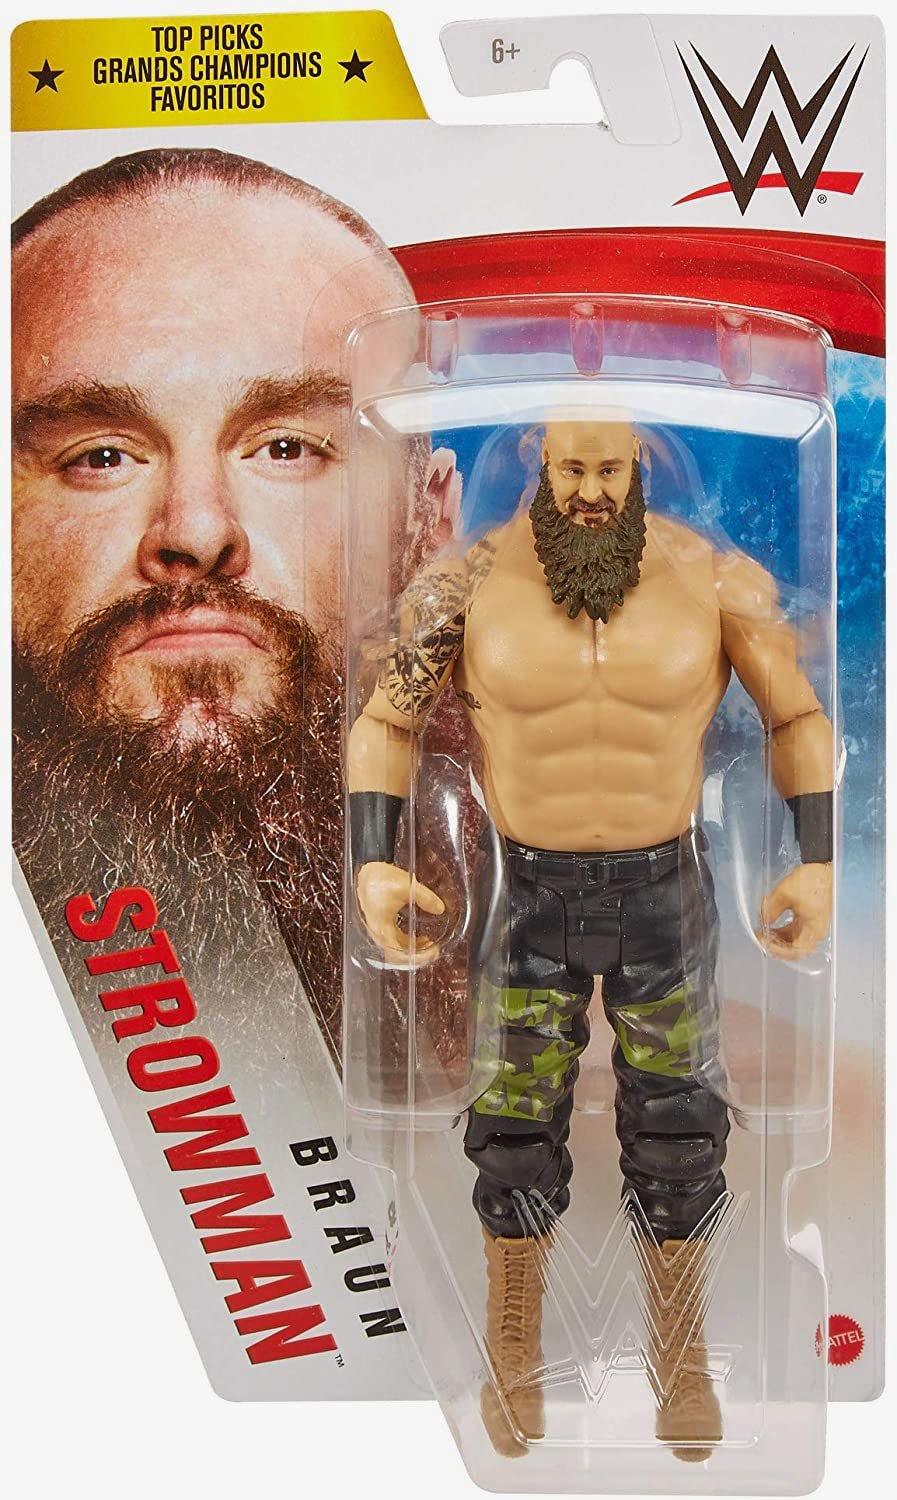 Braun Strowman - WWE Basic Series (Top Picks 2020)